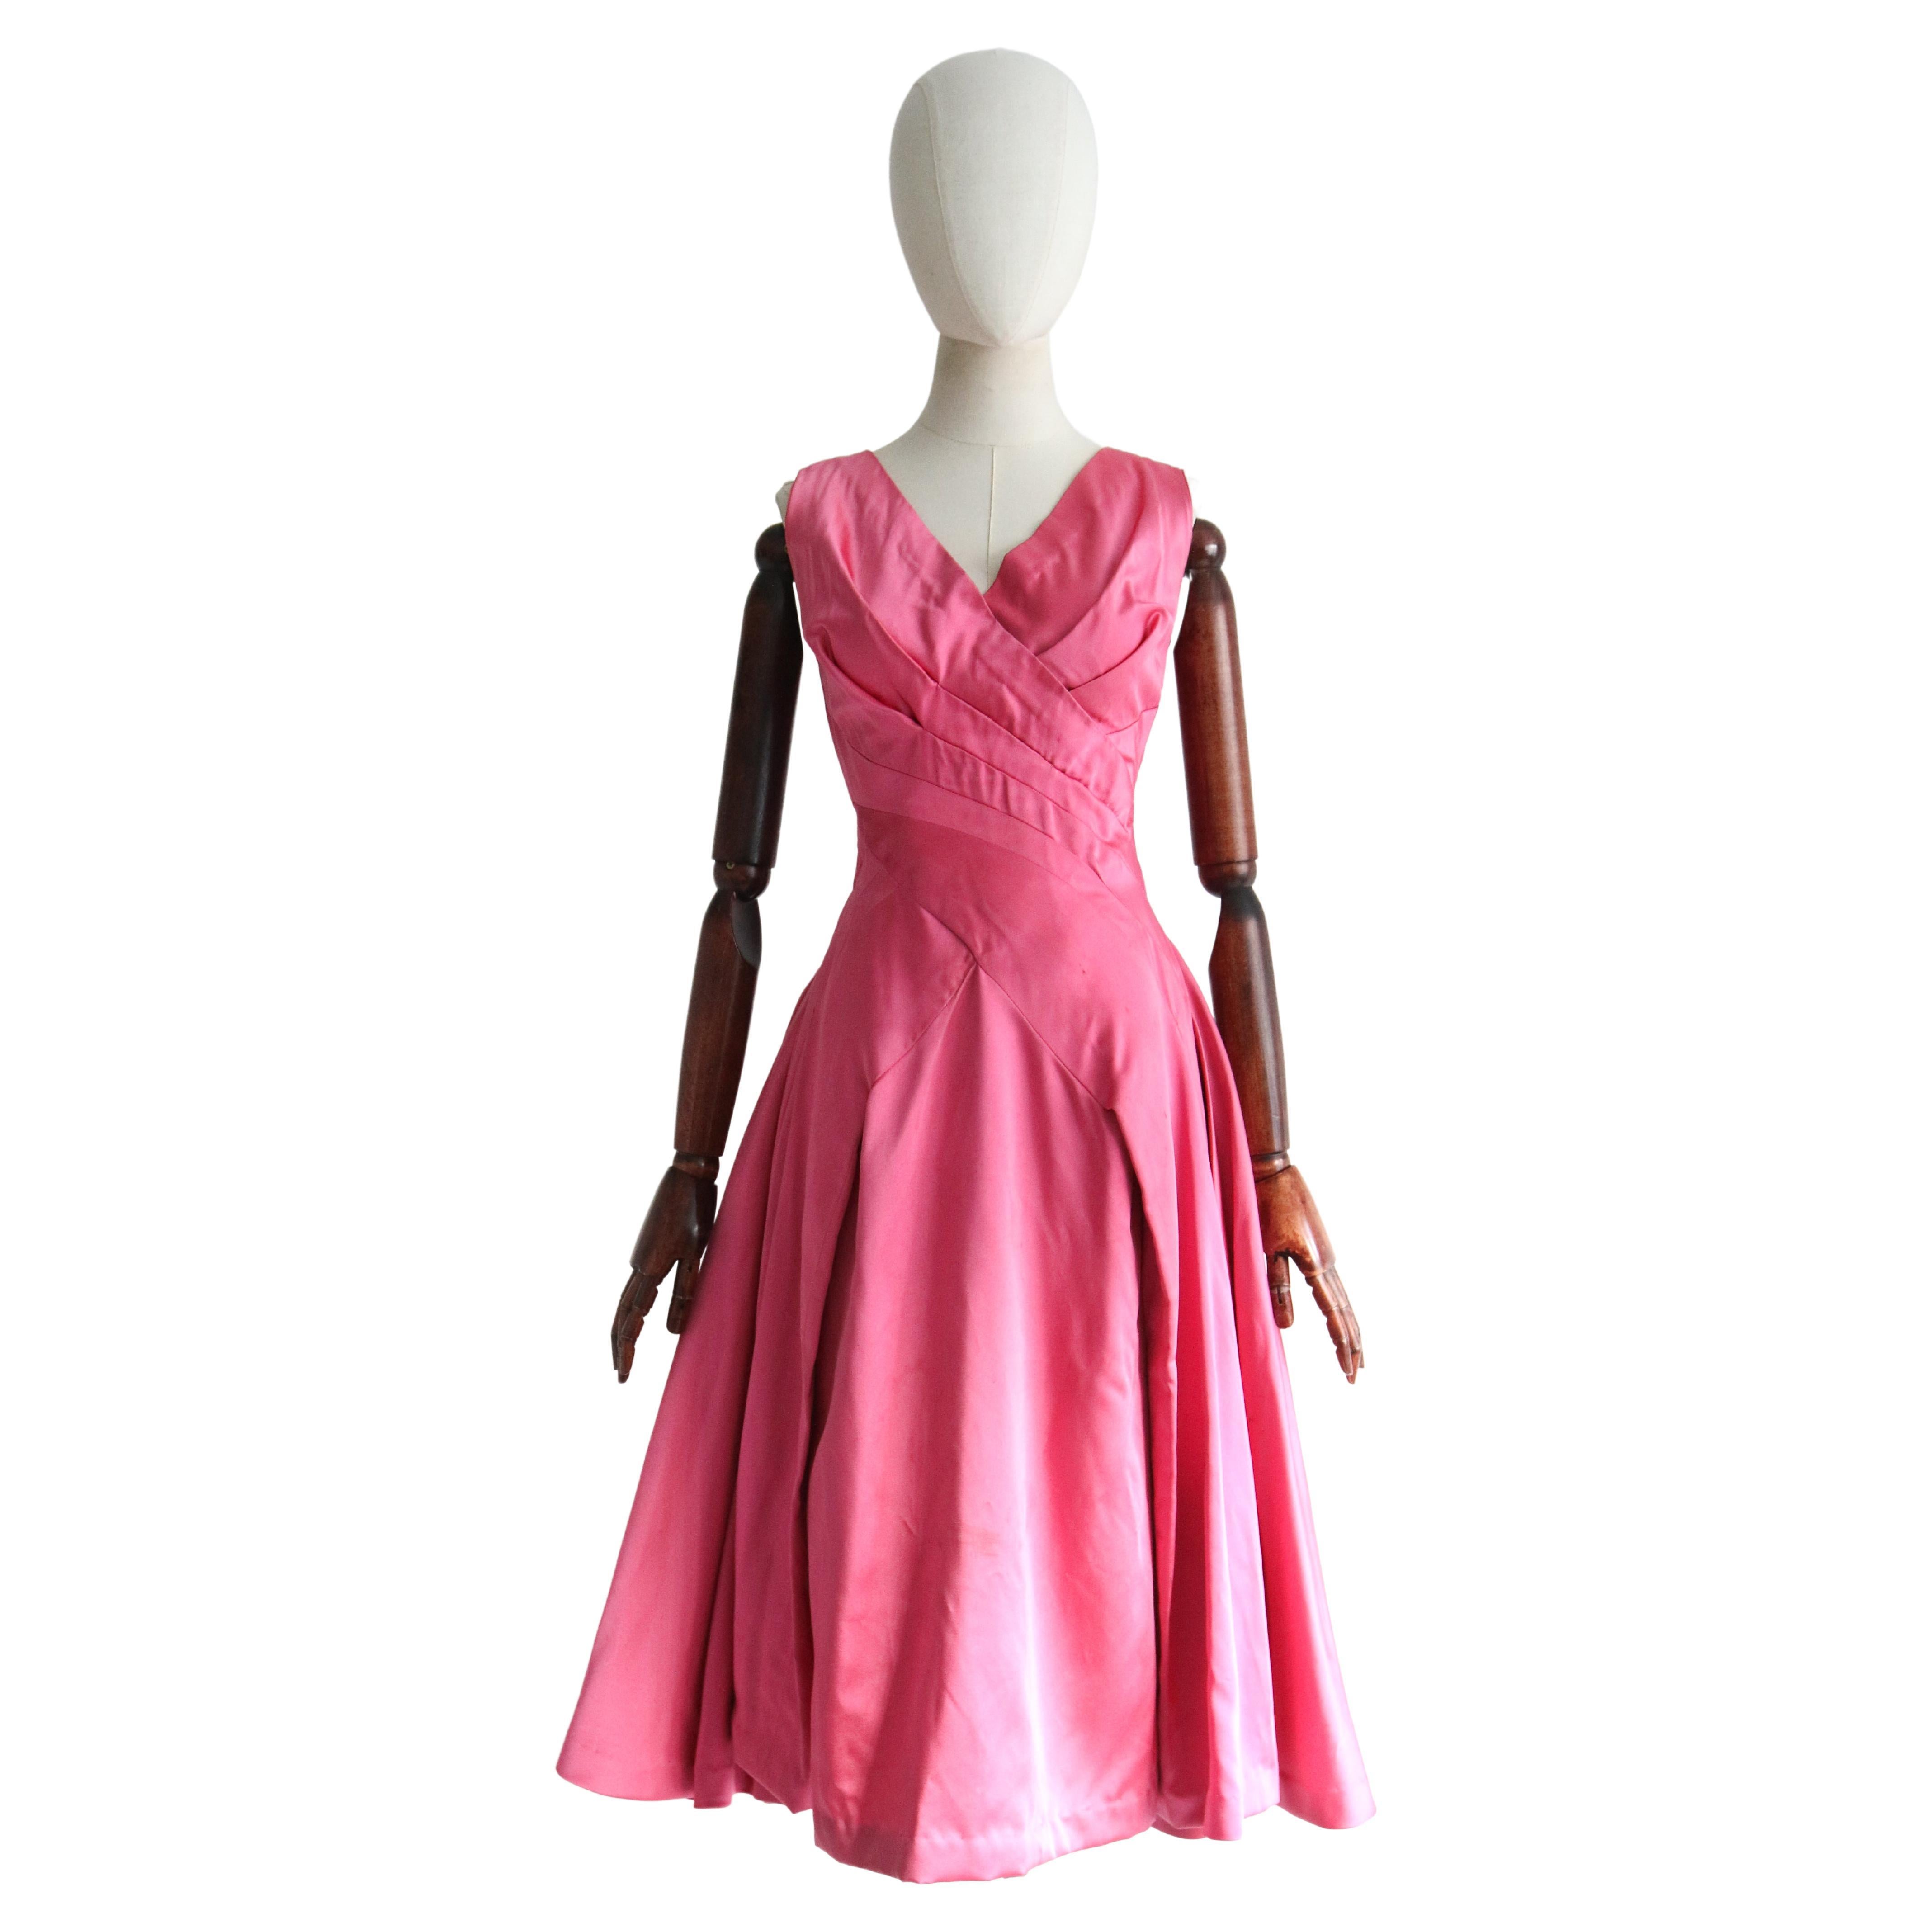 Vintage 1950's Duchess Satin Sweet Pink Pleated Dress UK 8-10 US 4-6